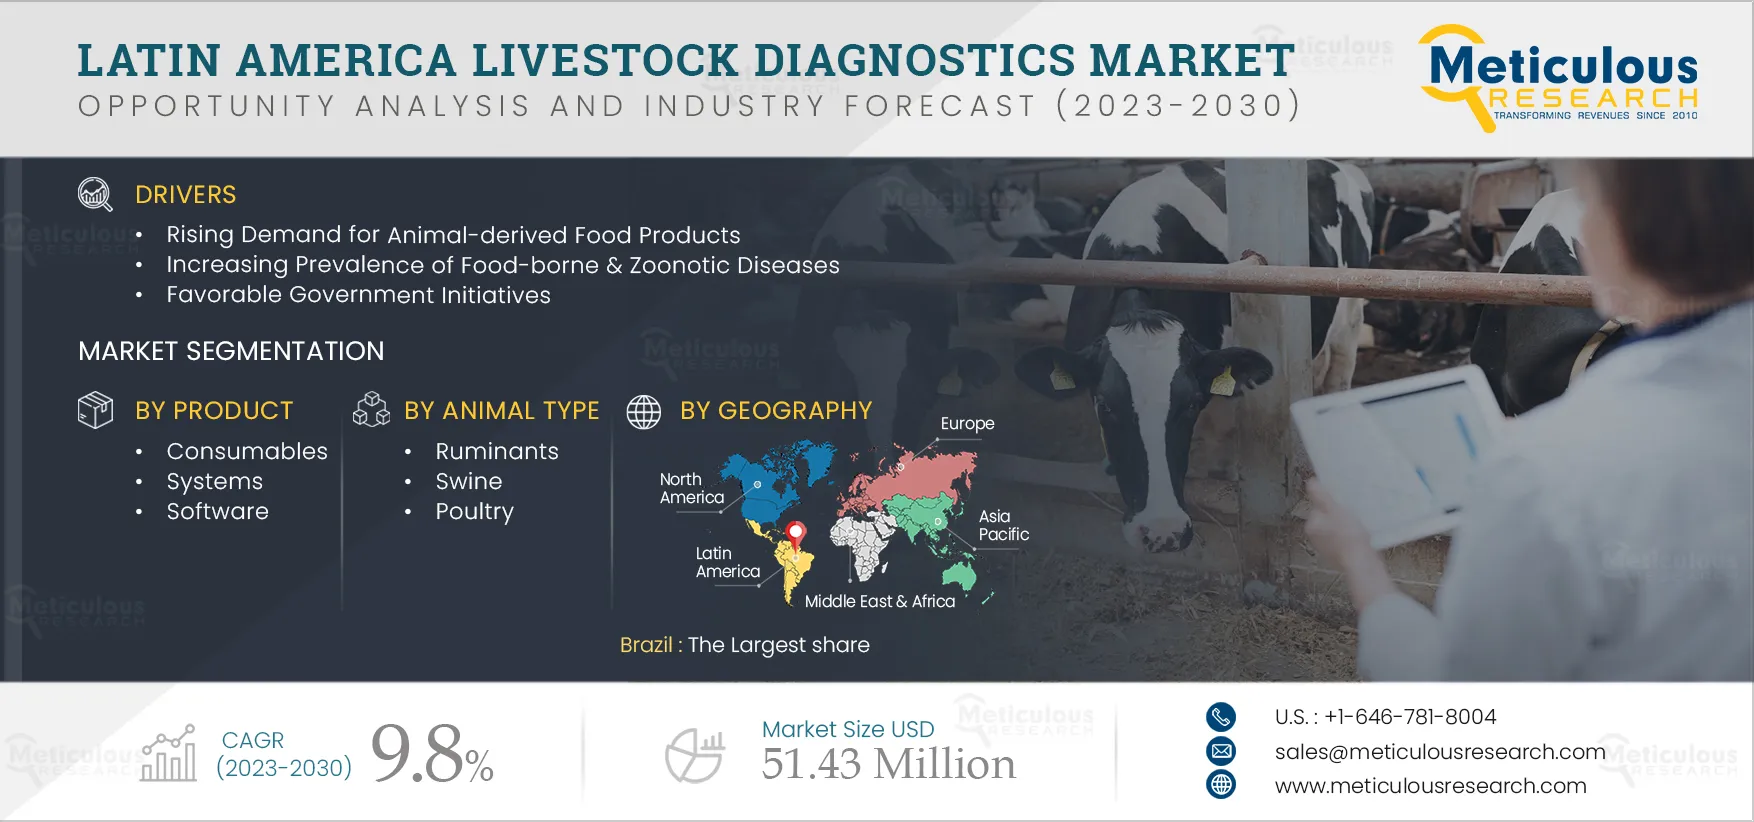 Latin America Livestock Diagnostics Market